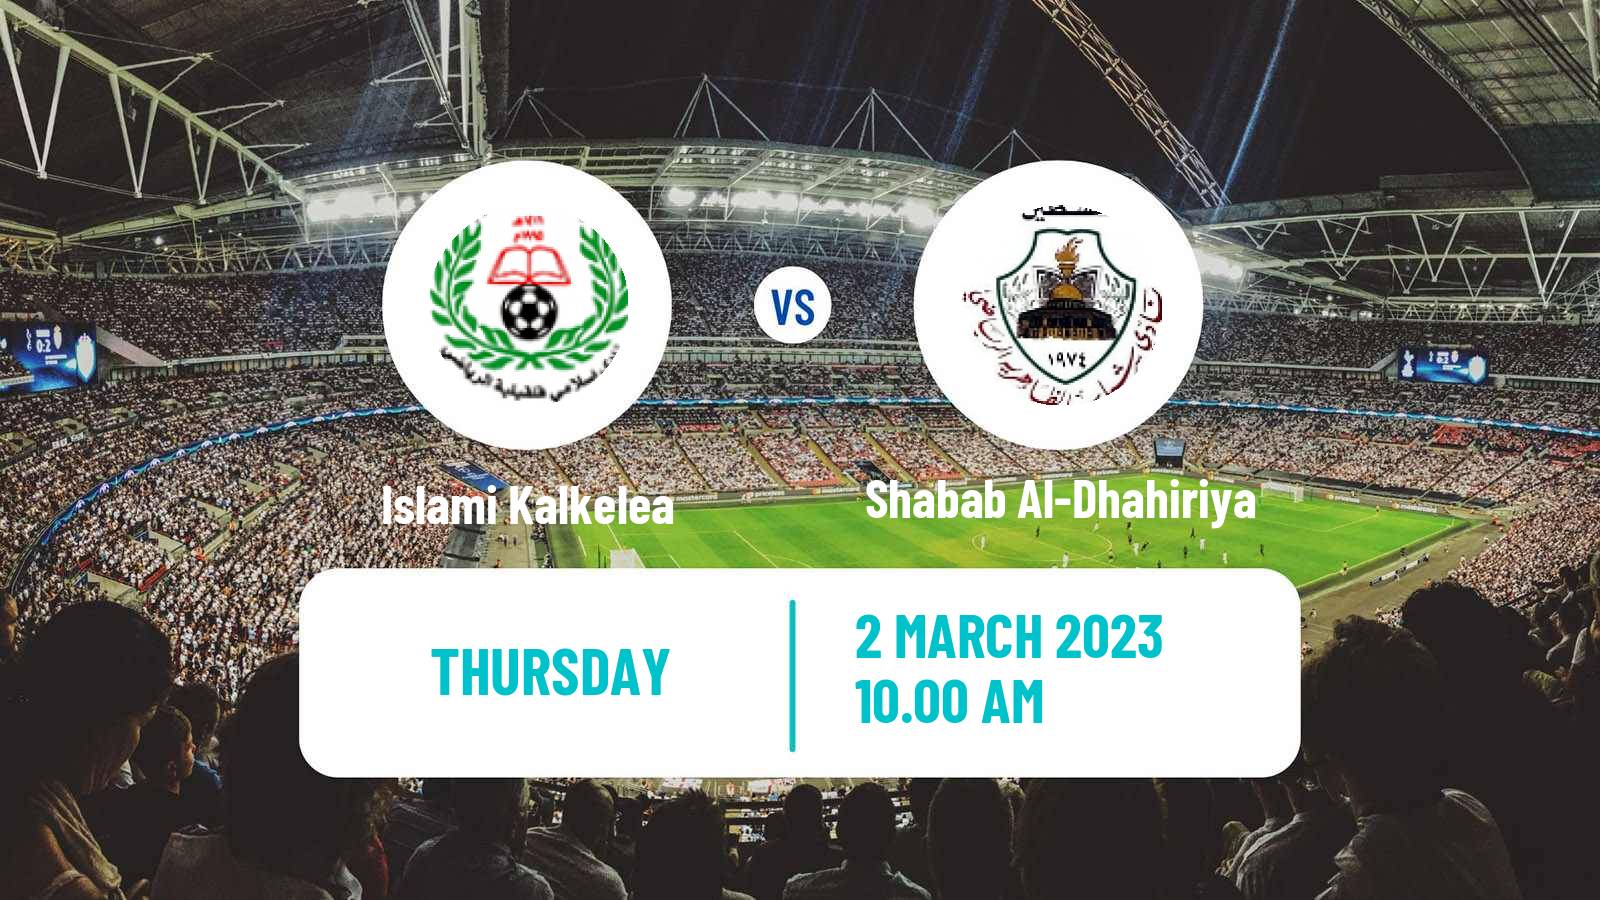 Soccer Palestinian Premier League Islami Kalkelea - Shabab Al-Dhahiriya